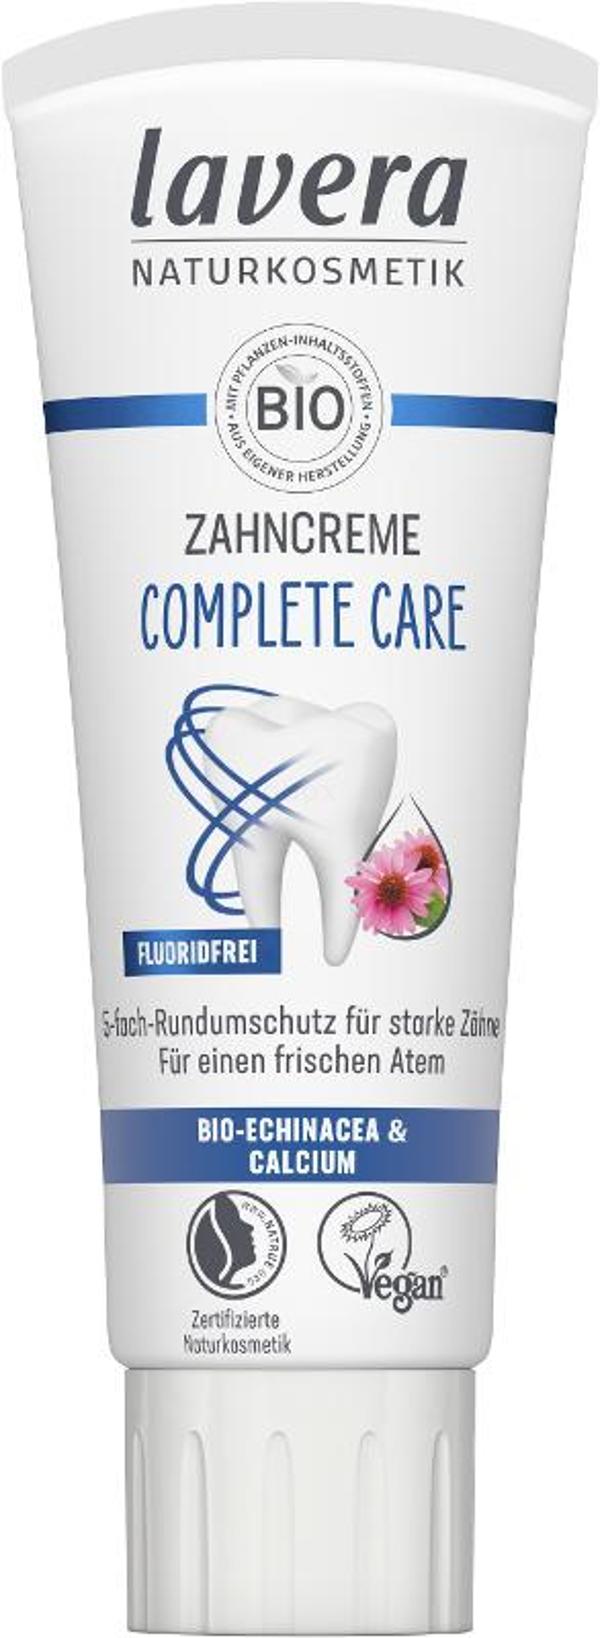 Produktfoto zu Zahncreme Complete Care Fluoridfrei